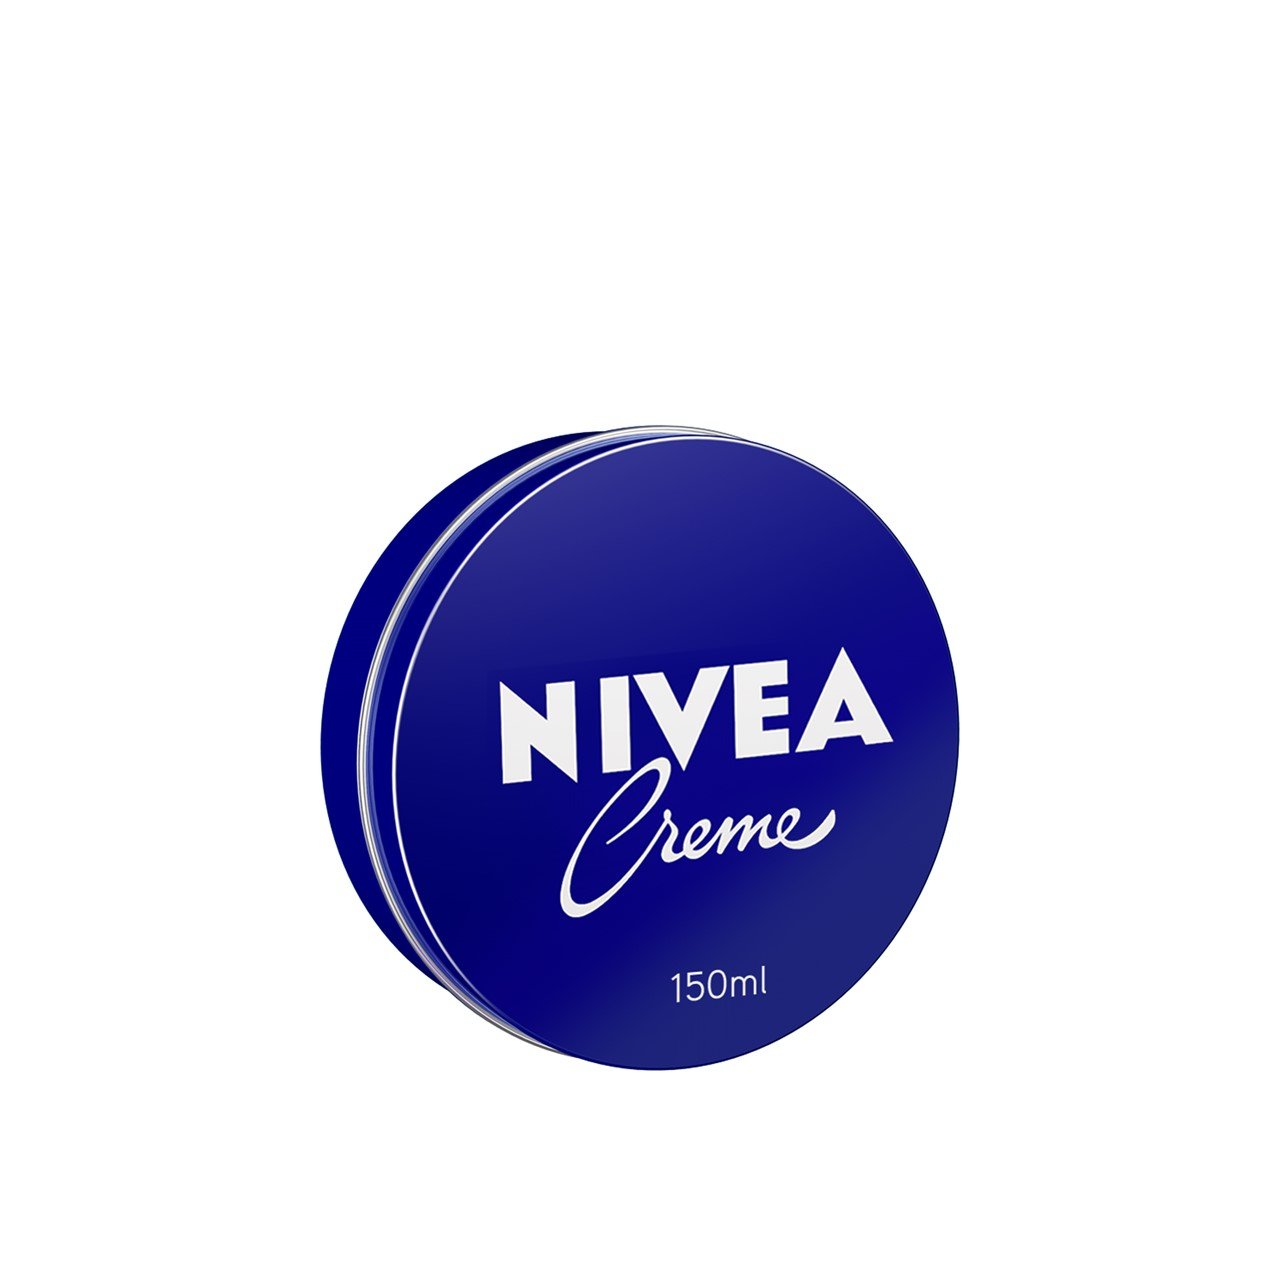 Nivea Cream 150ml (5.07fl oz)